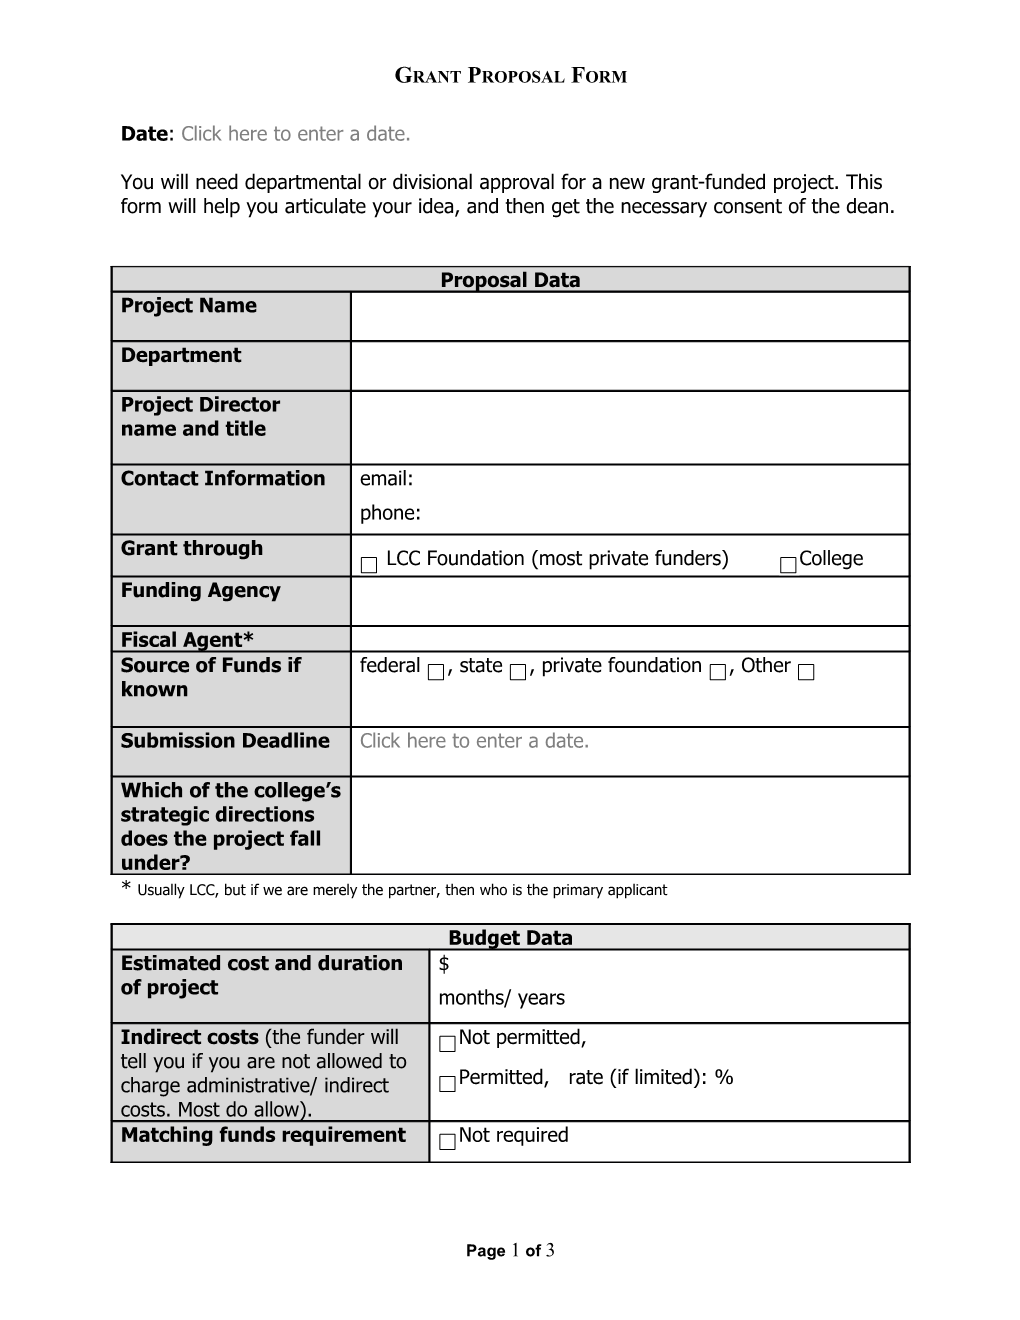 Grant Proposal Form